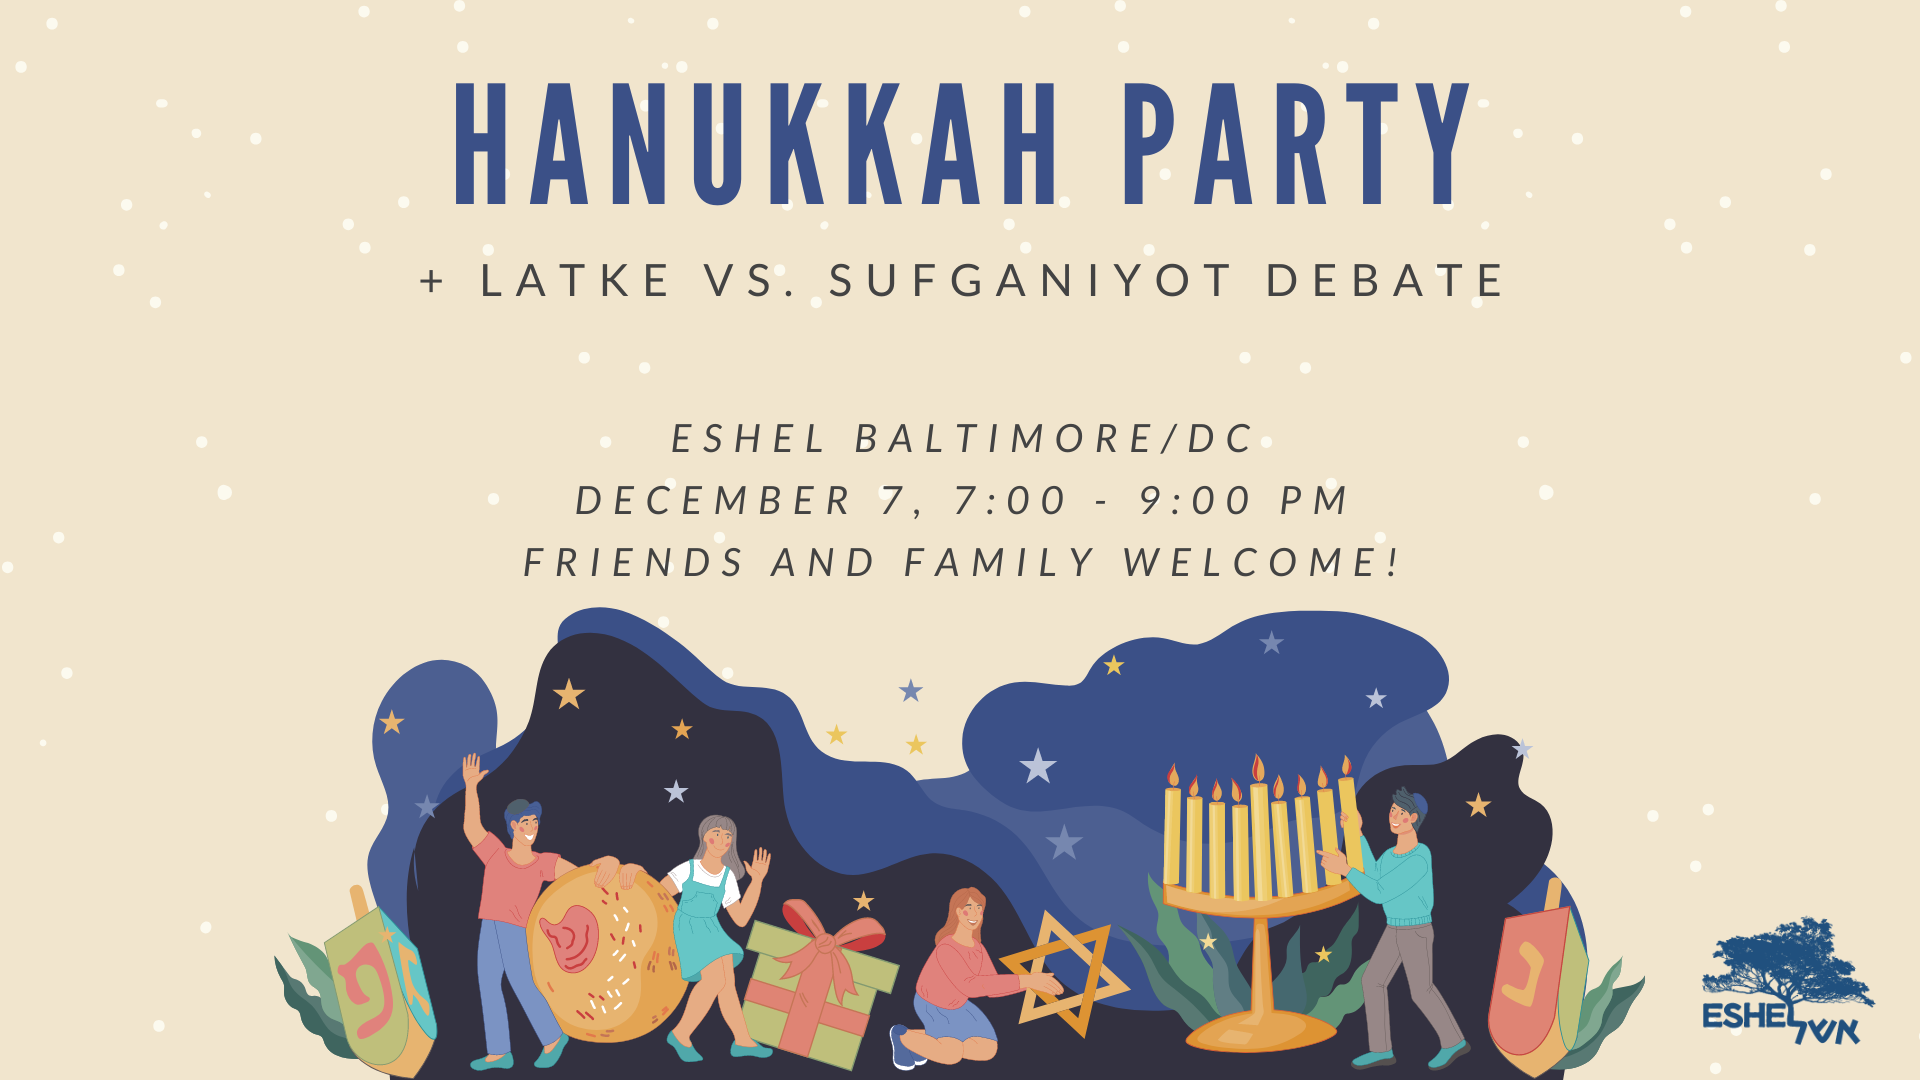 Hanukkah Party + Latke vs. Sufganiyot Debate, Eshel Baltimore/DC, December 7, 7:00 - 9:00 pm. Friends and Family Welcome!